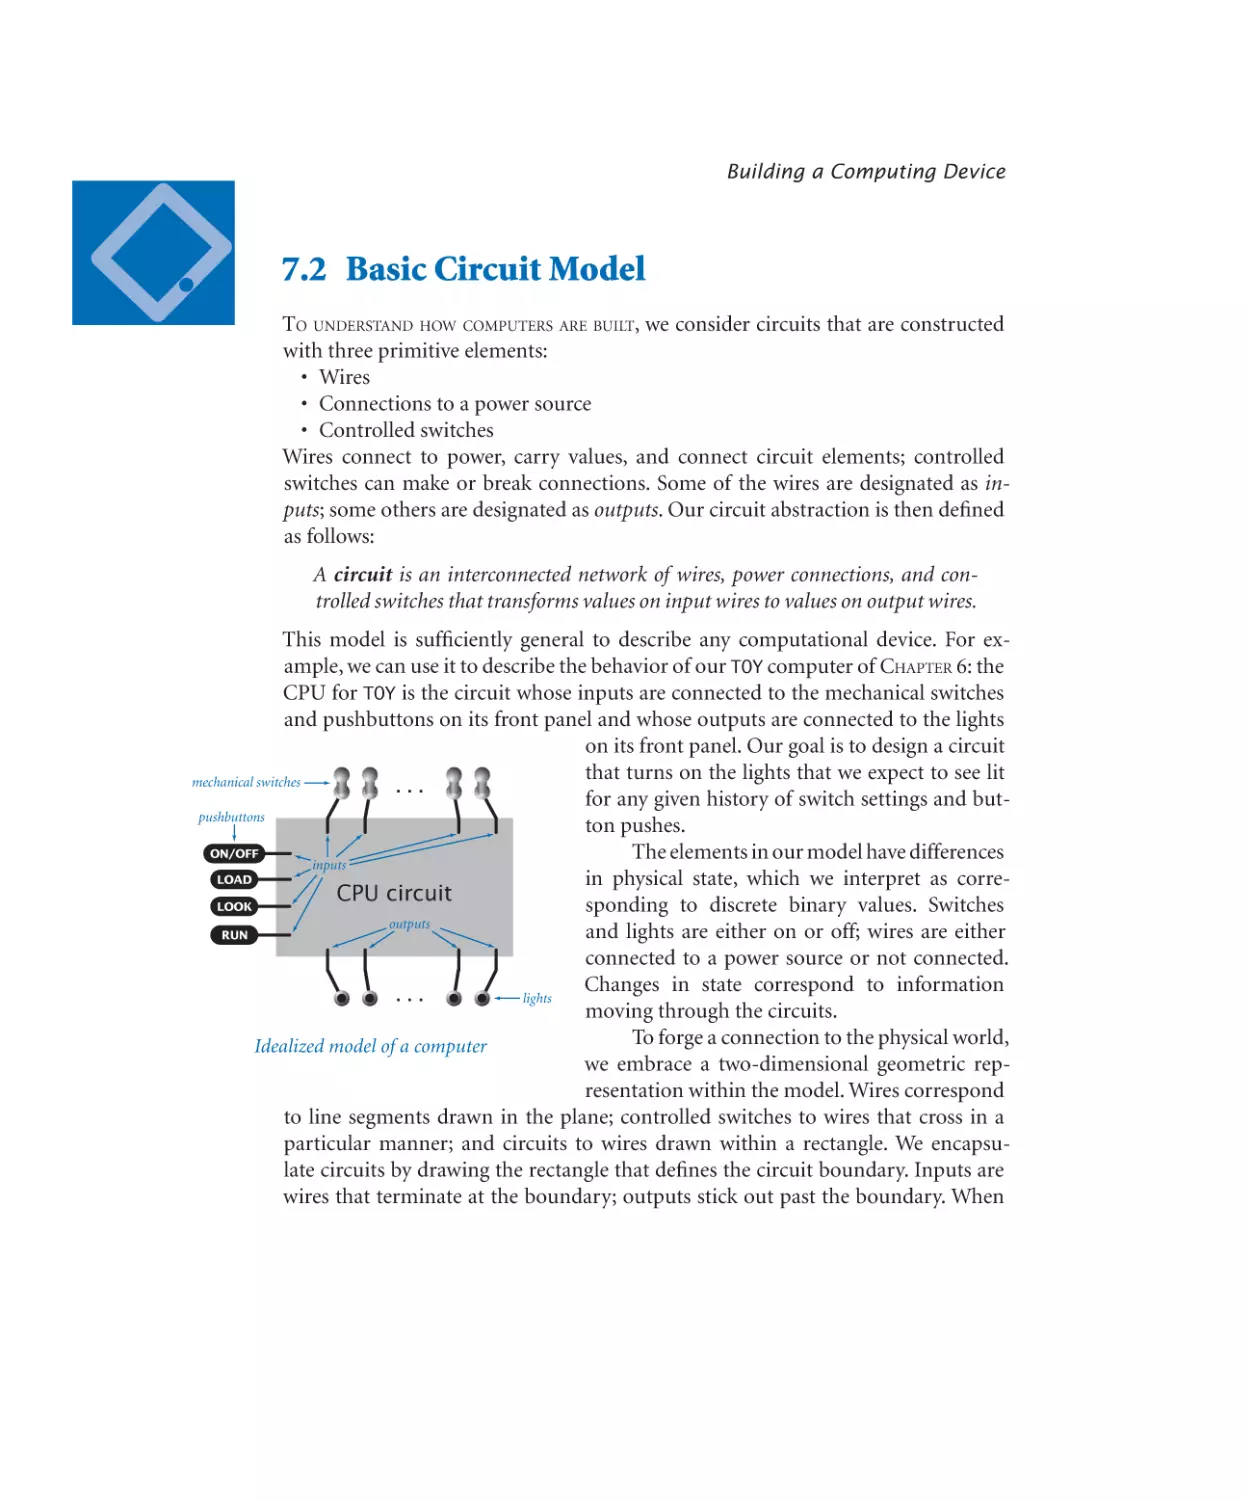 7.2 Basic Circuit Model